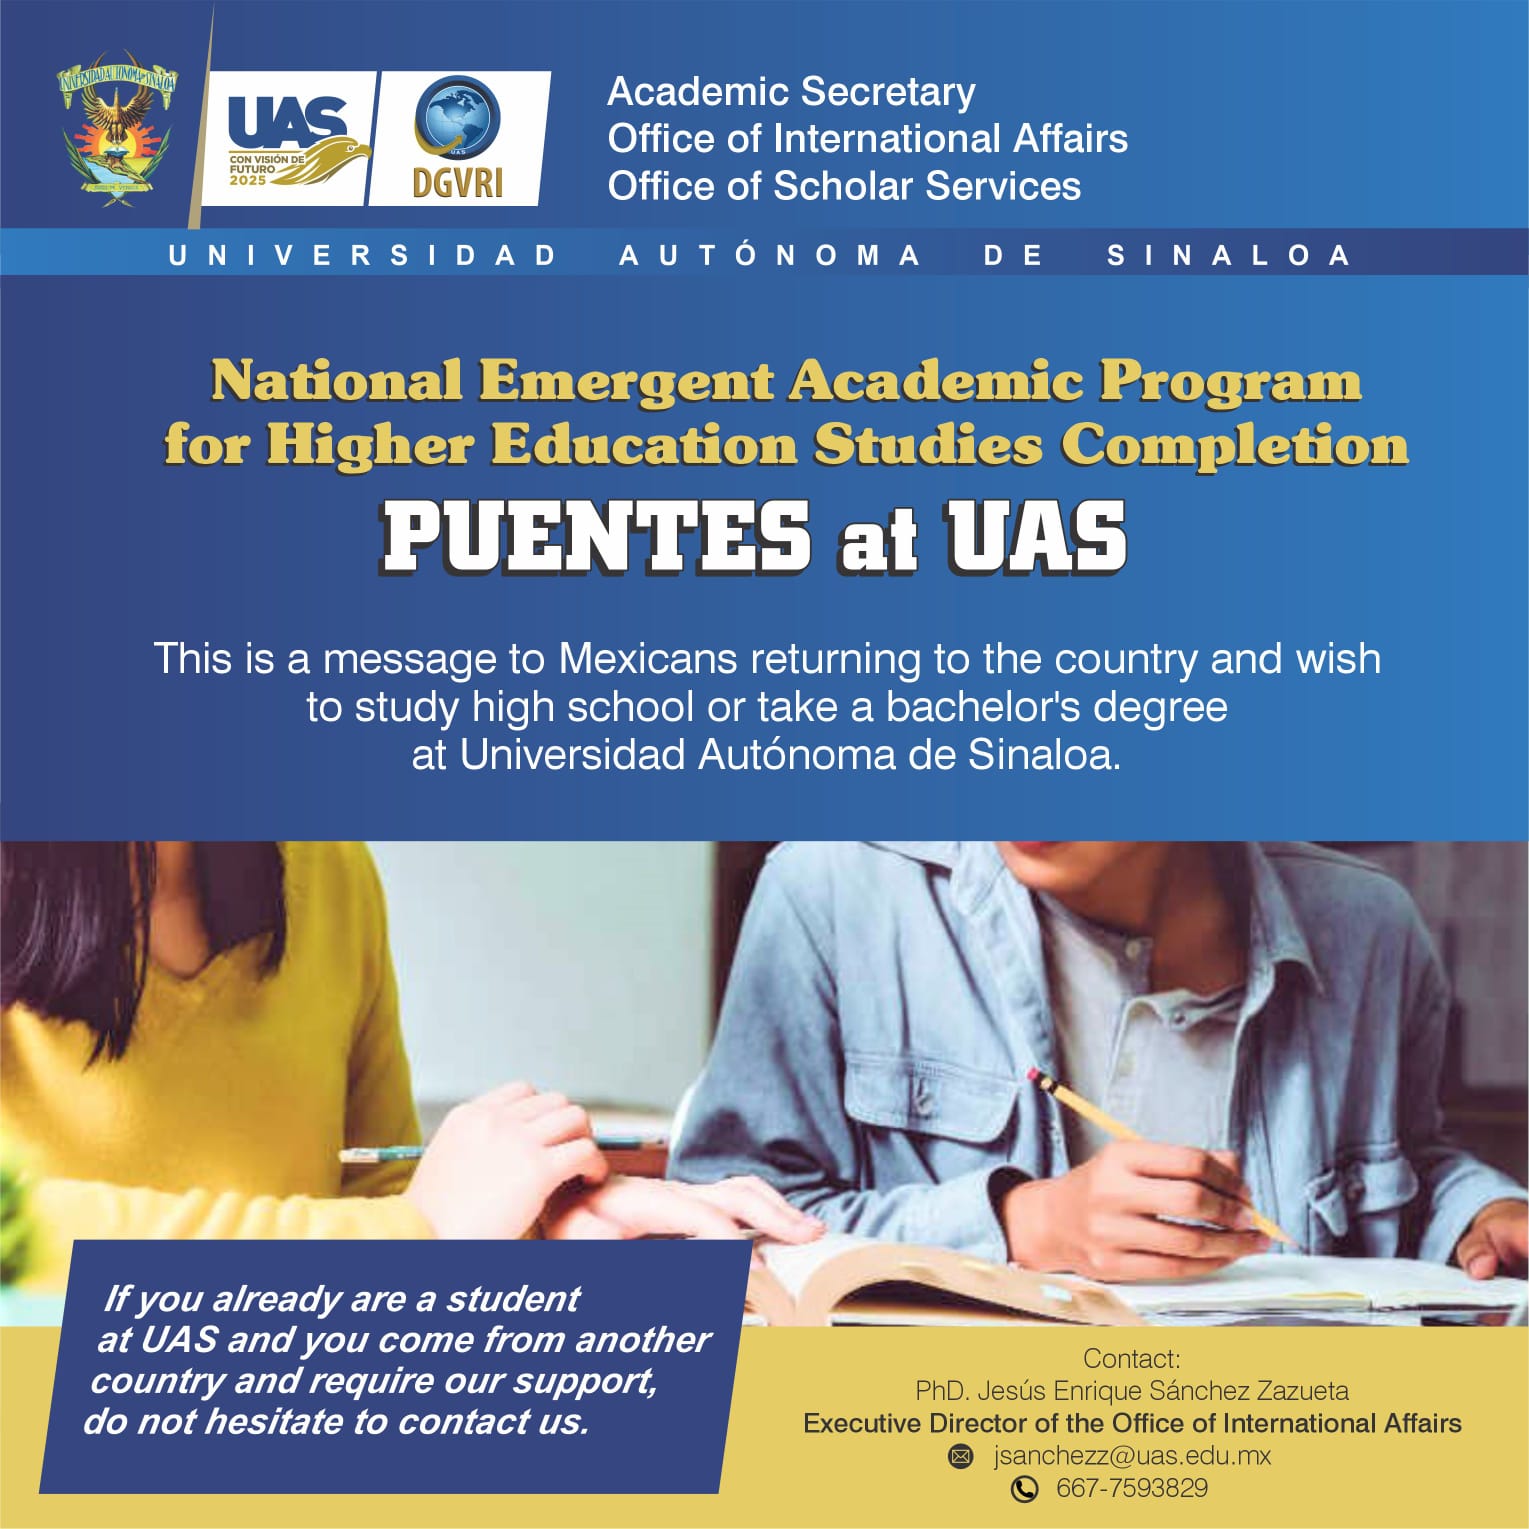 National emergent academic program for higher education studies completion PUENTES at UAS